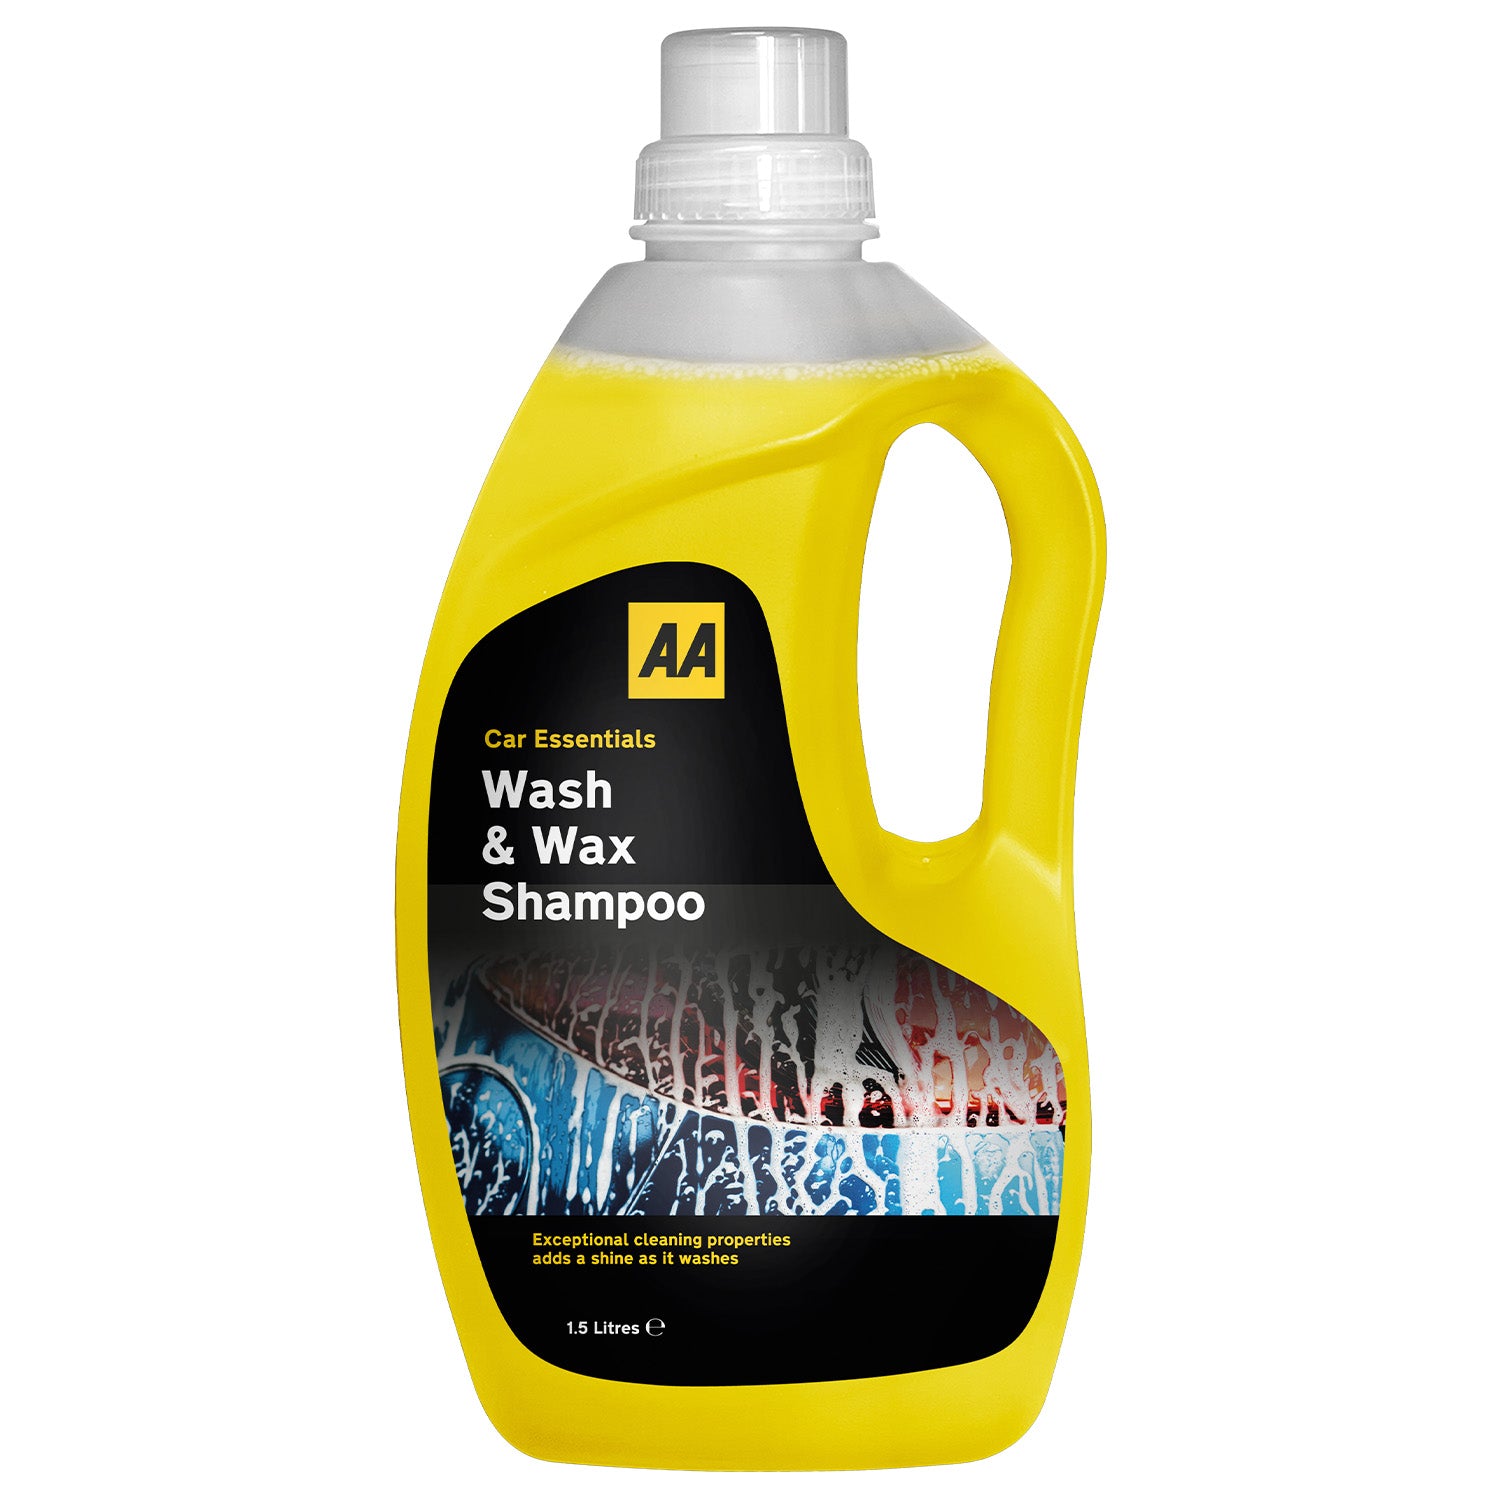 AA Wash and Wax Car Shampoo 2 x 1.5 Litre